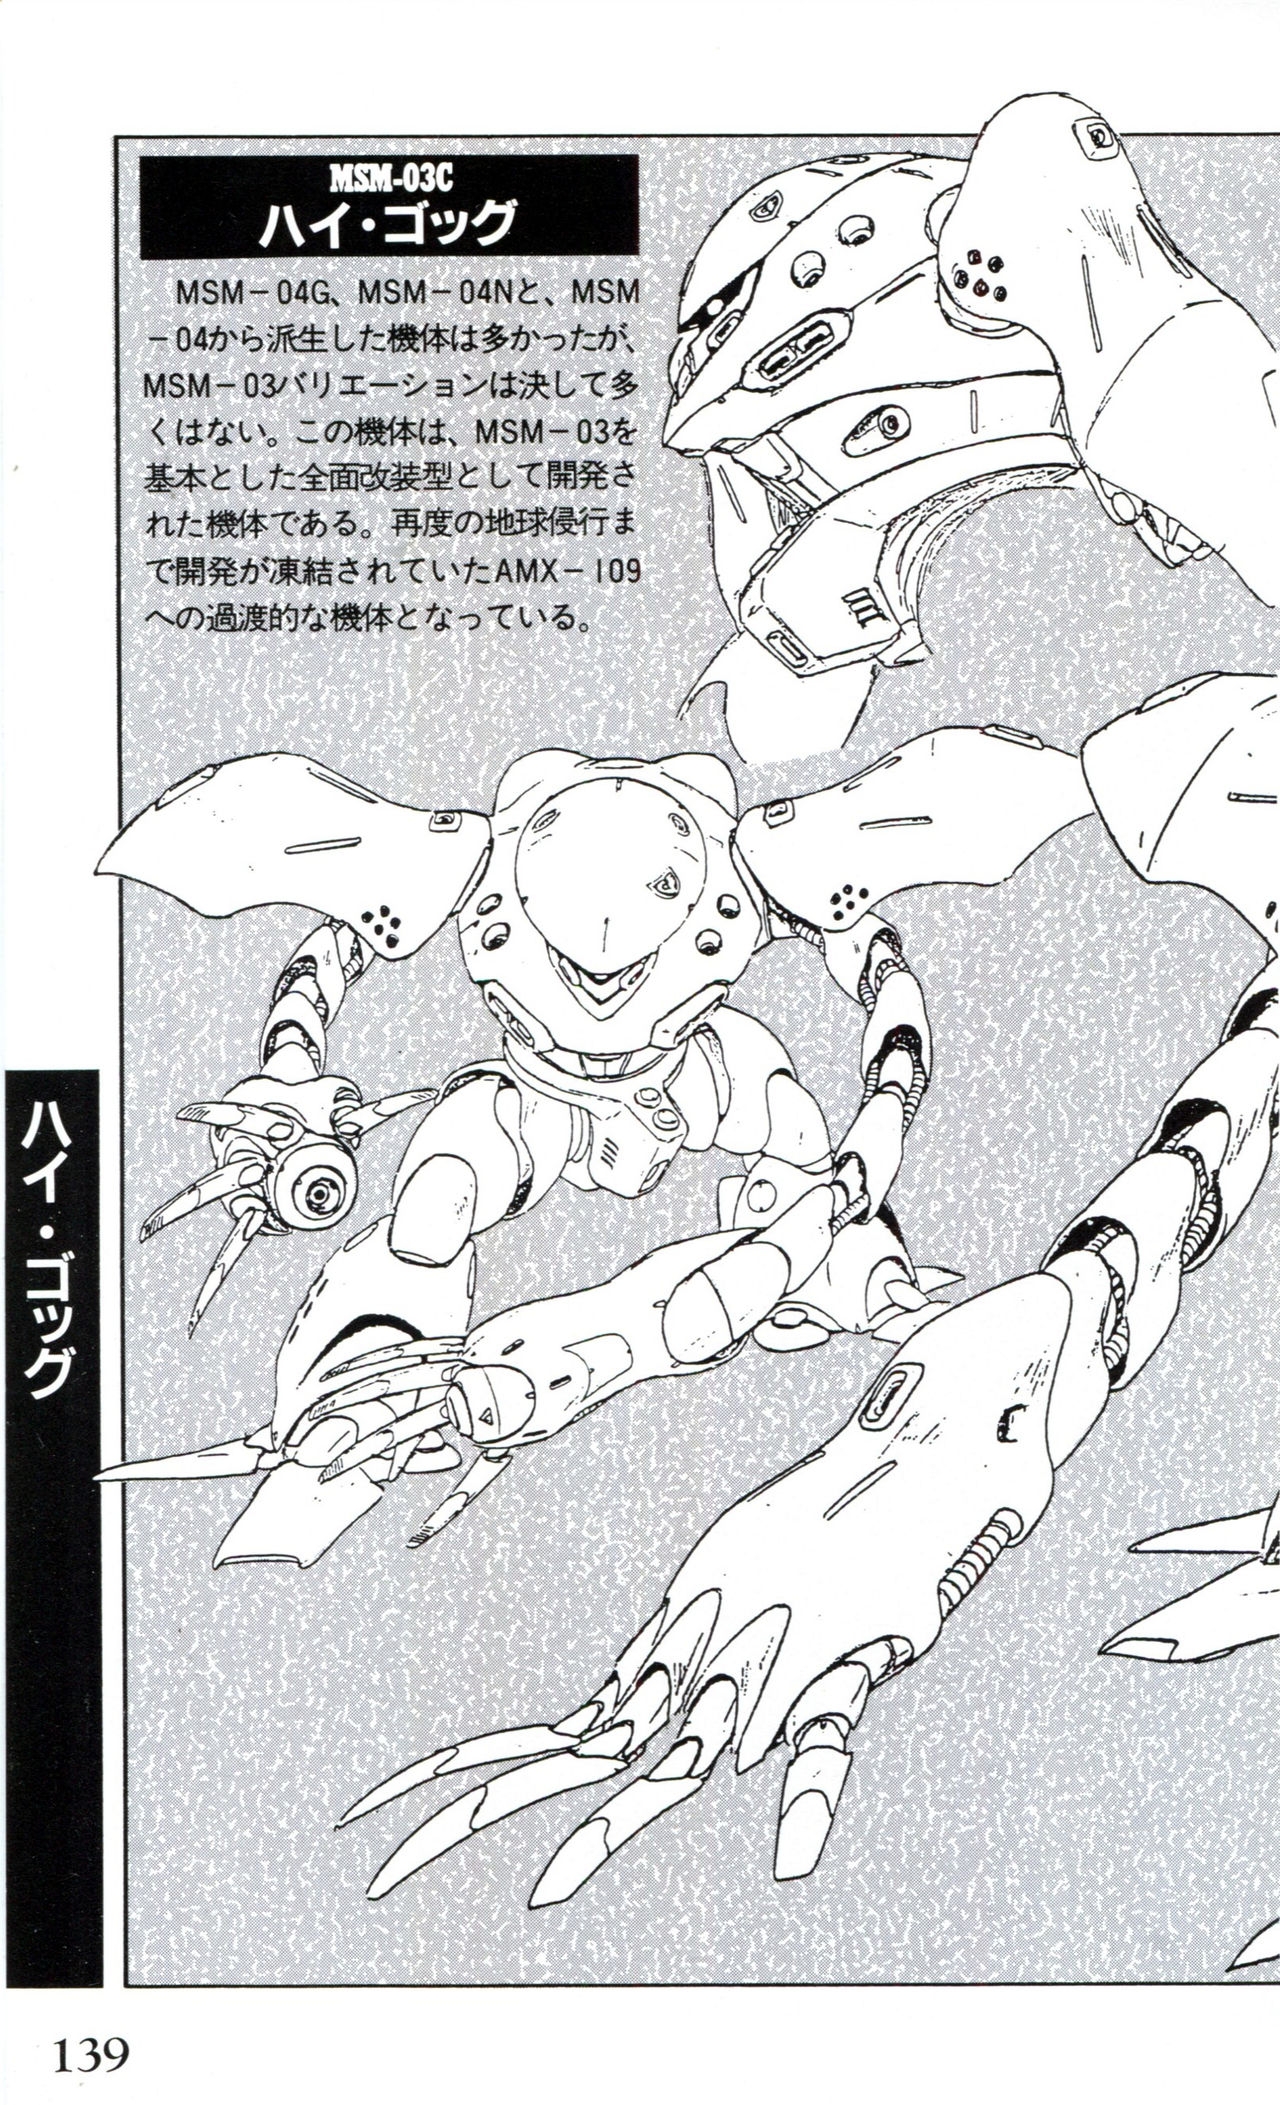 Mobile Suit Gundam U.C. Box MS Gundam Encyclopedia NO.01 - Mobile Suit Gundam 138